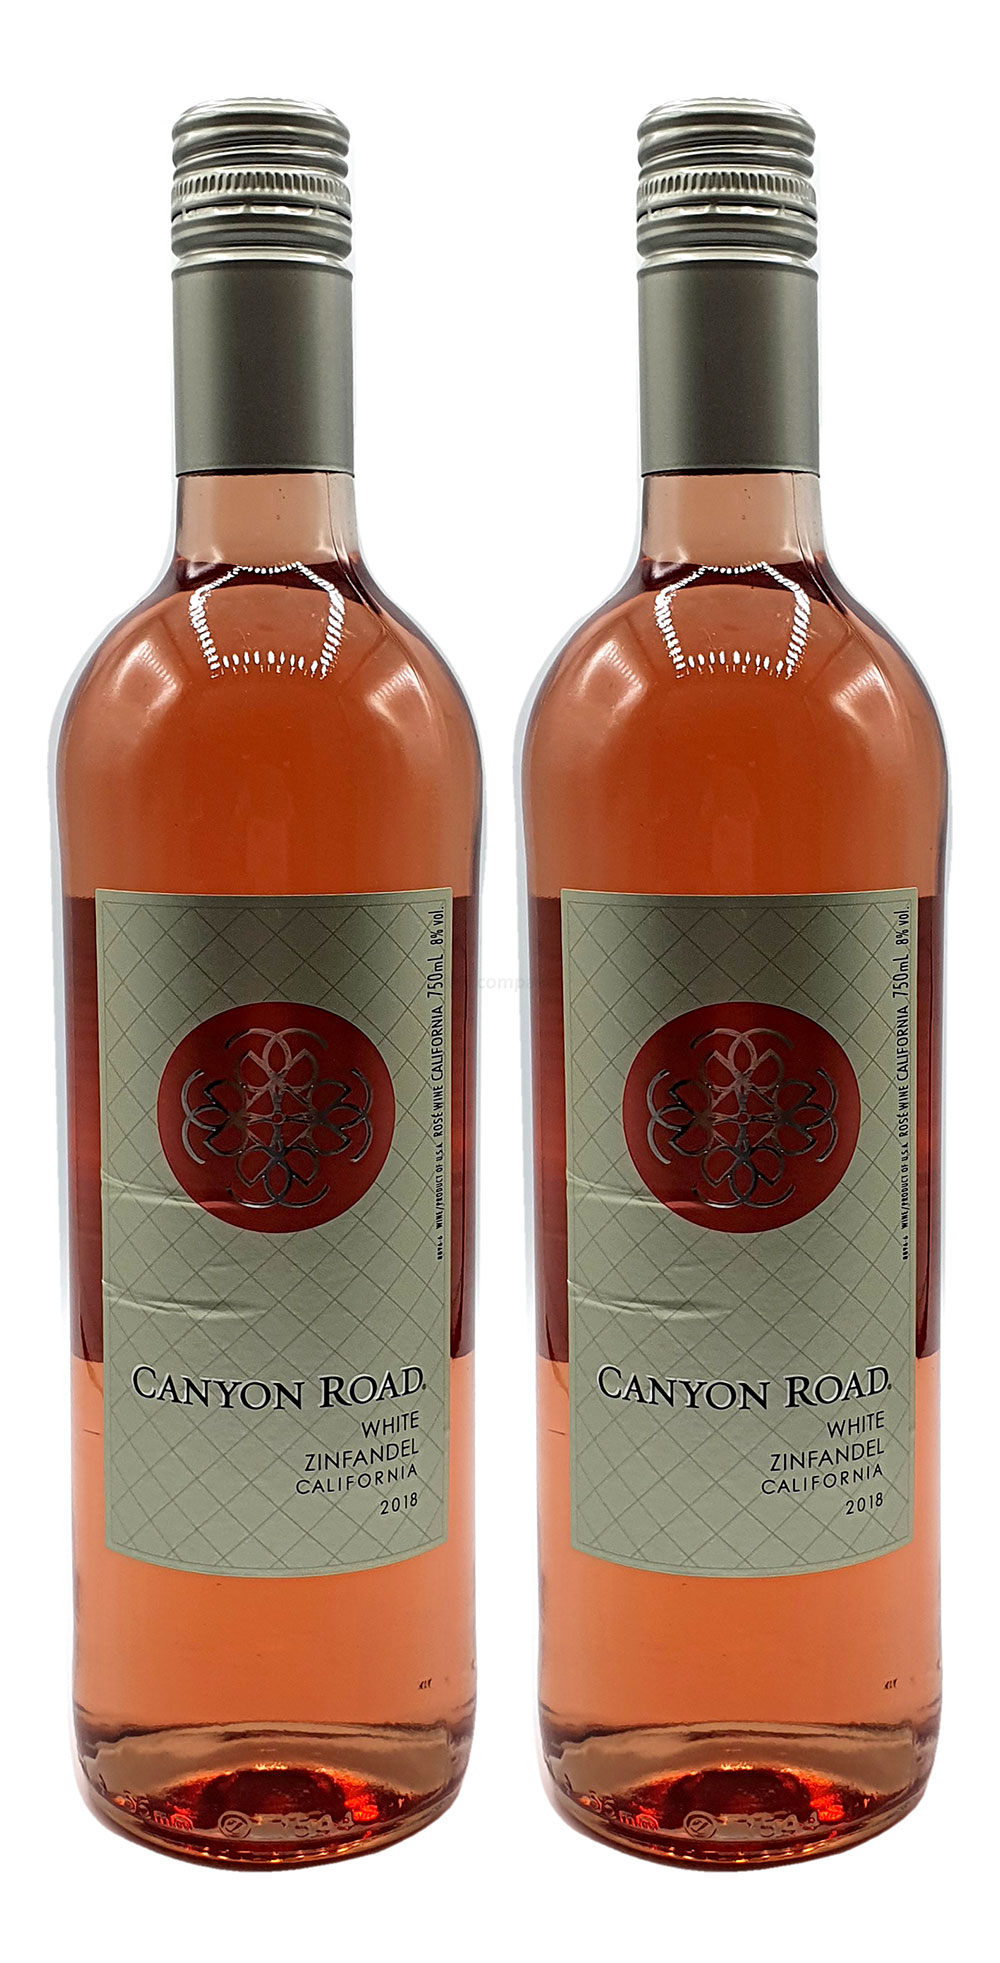 Rose Wein Set - 2x Canyon Road Zinfandel 750ml (8% Vol)- [Enthält Sulfite]